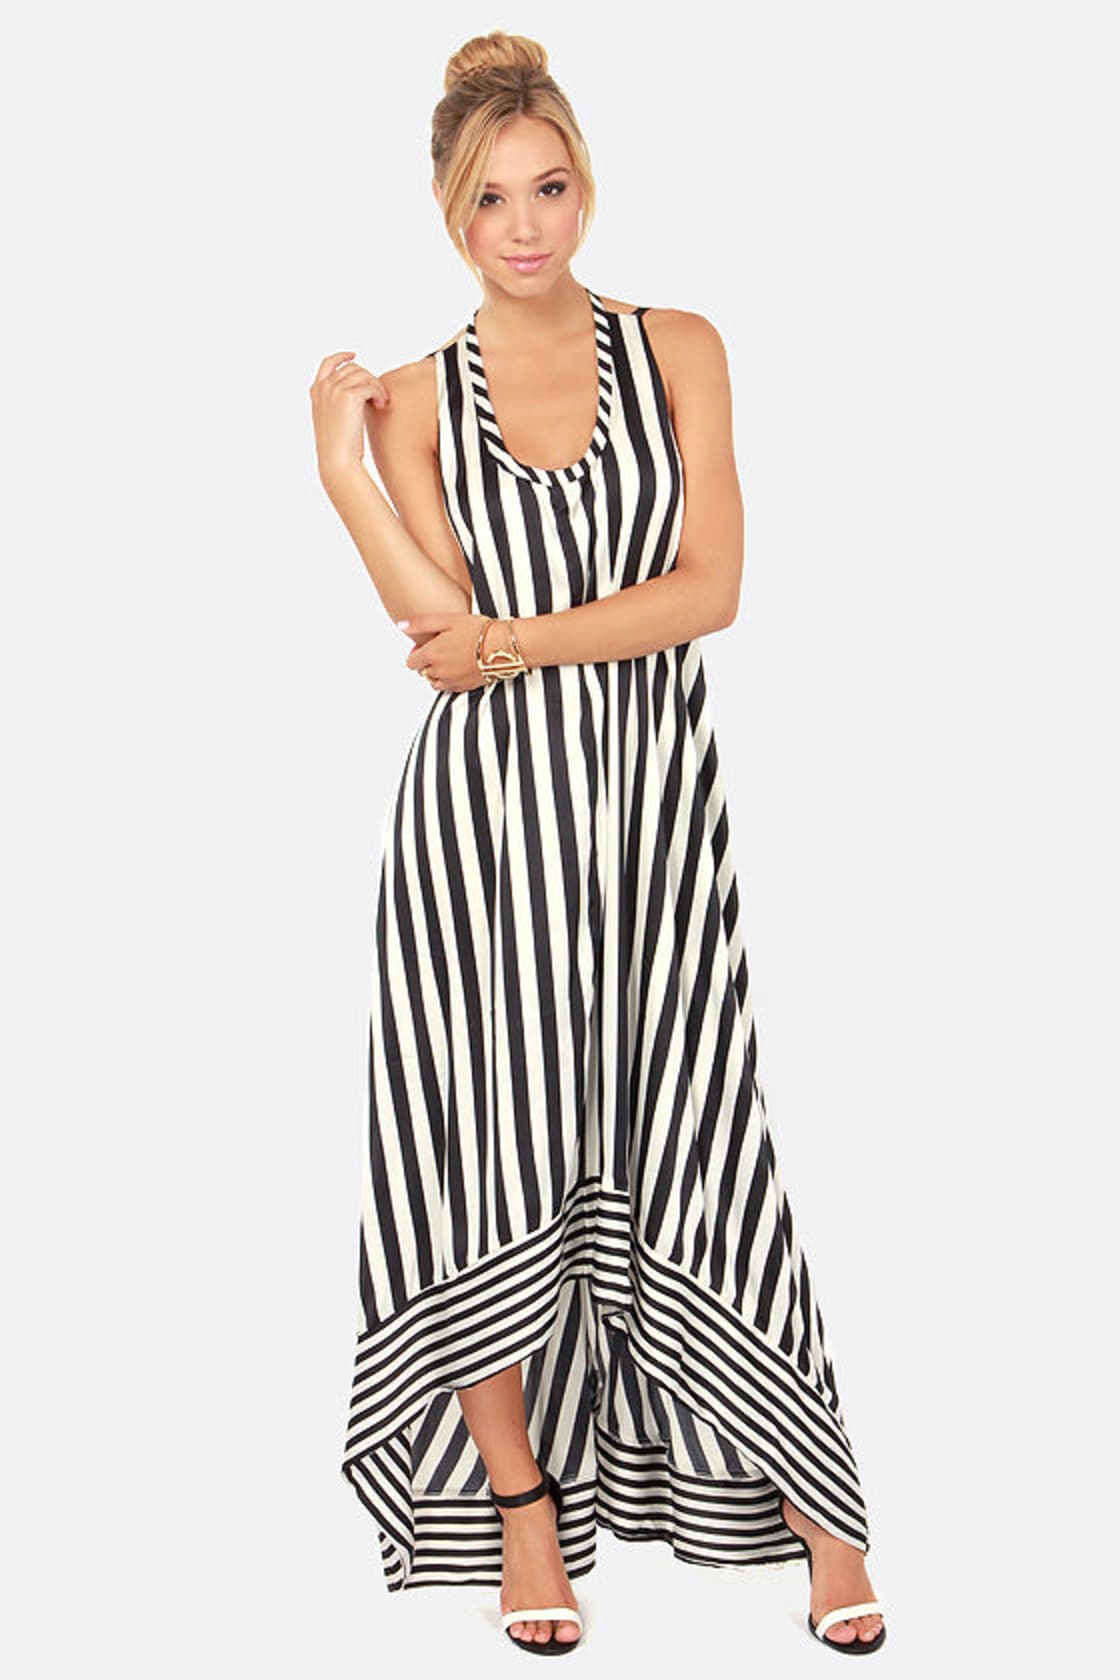 Cute Striped Dress - Maxi Dress - High-Low Dress - $108.00 - Lulus